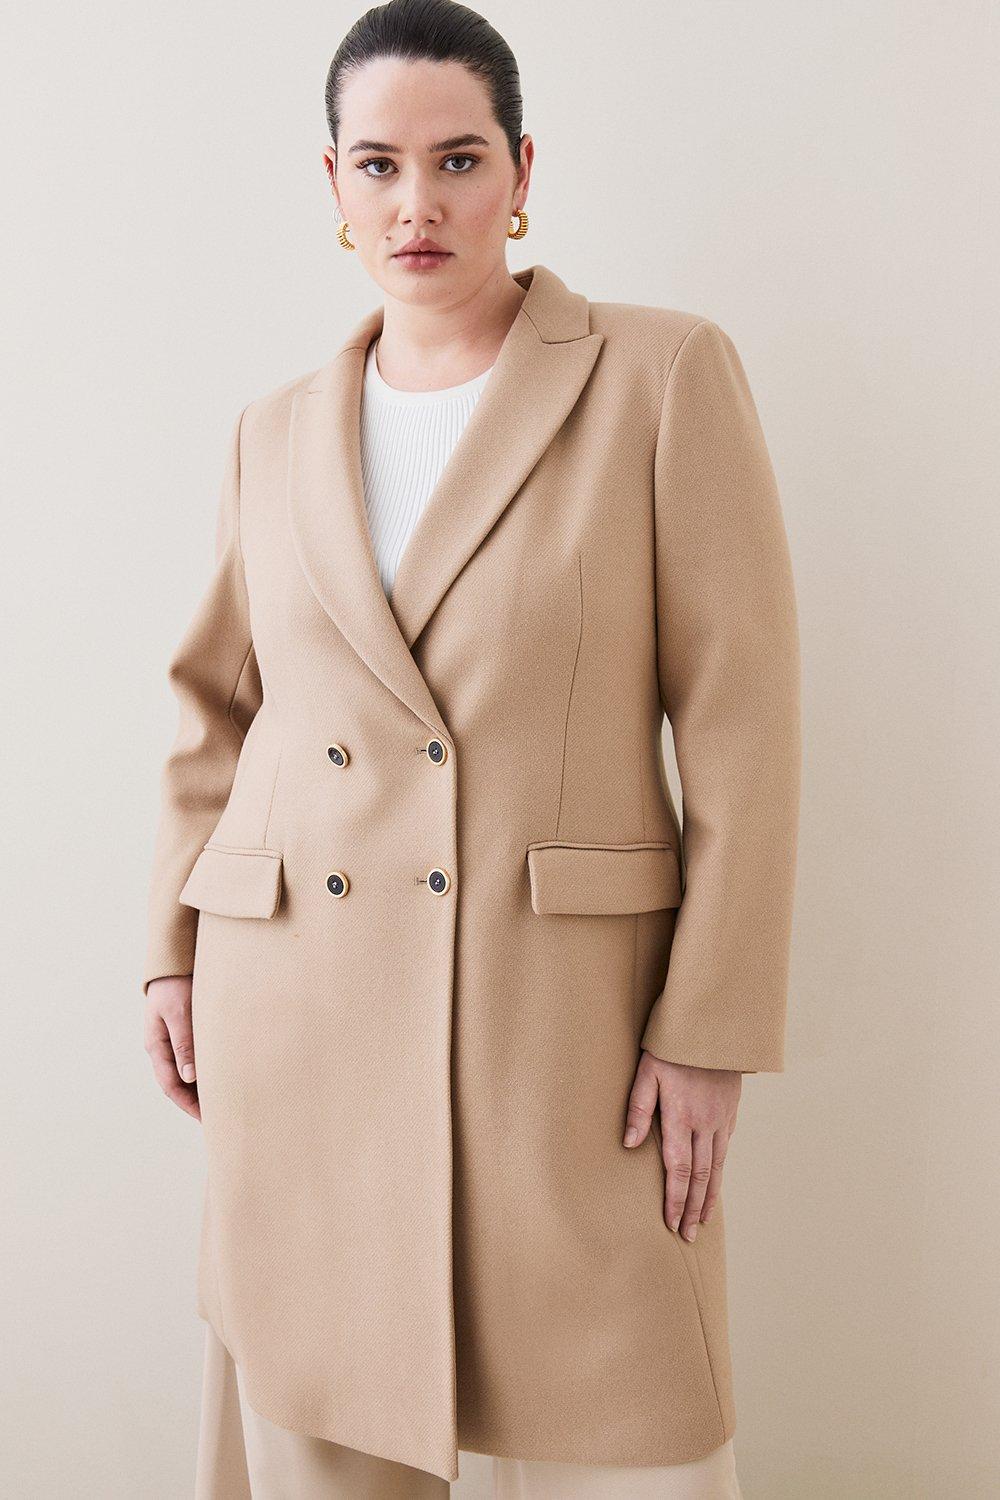 Karen Millen Womens Double Breasted Maxi Tailored Coat